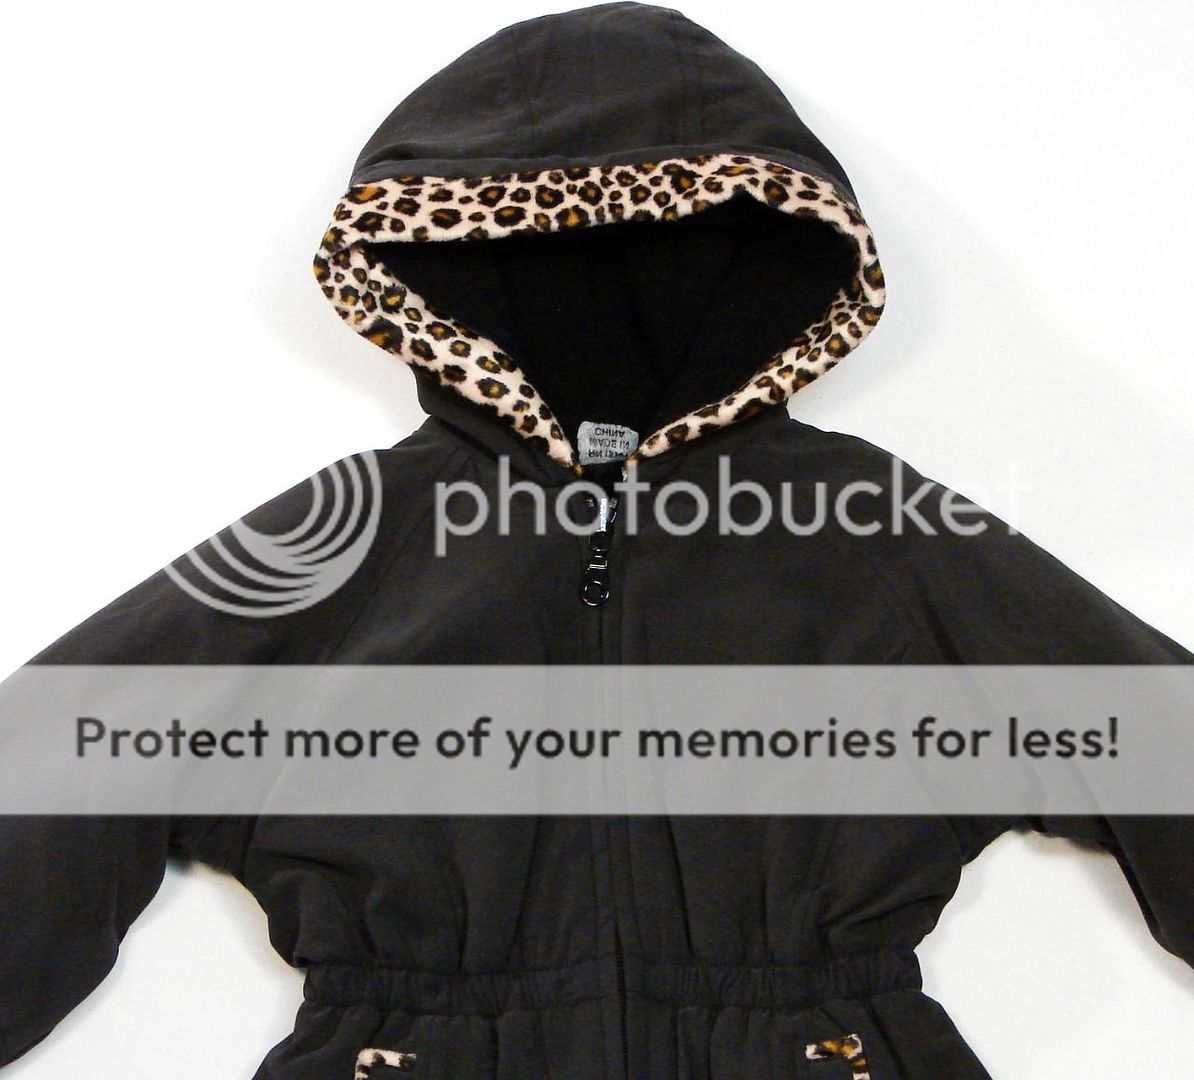 London Fog Reversible Hooded Winter Coat Jacket Black Leopard Girls 12 Months